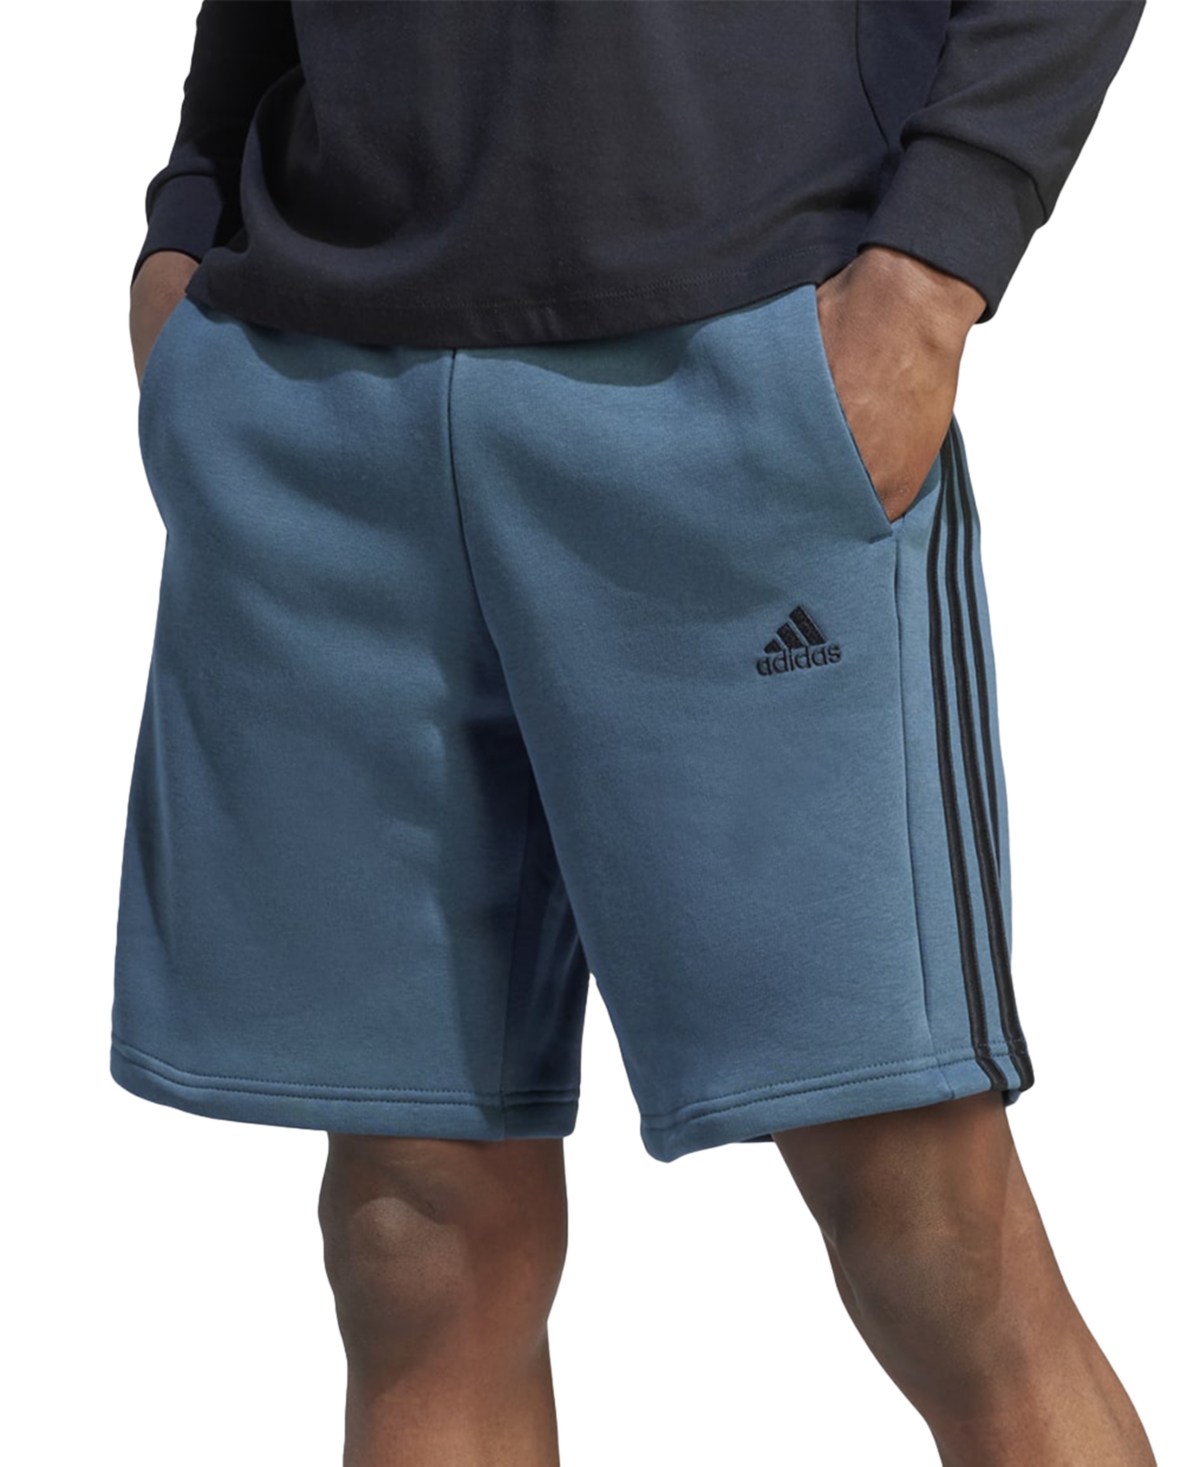 Adidas Originals Men's 3-stripes 10" Fleece Shorts In Arctic Night,blk